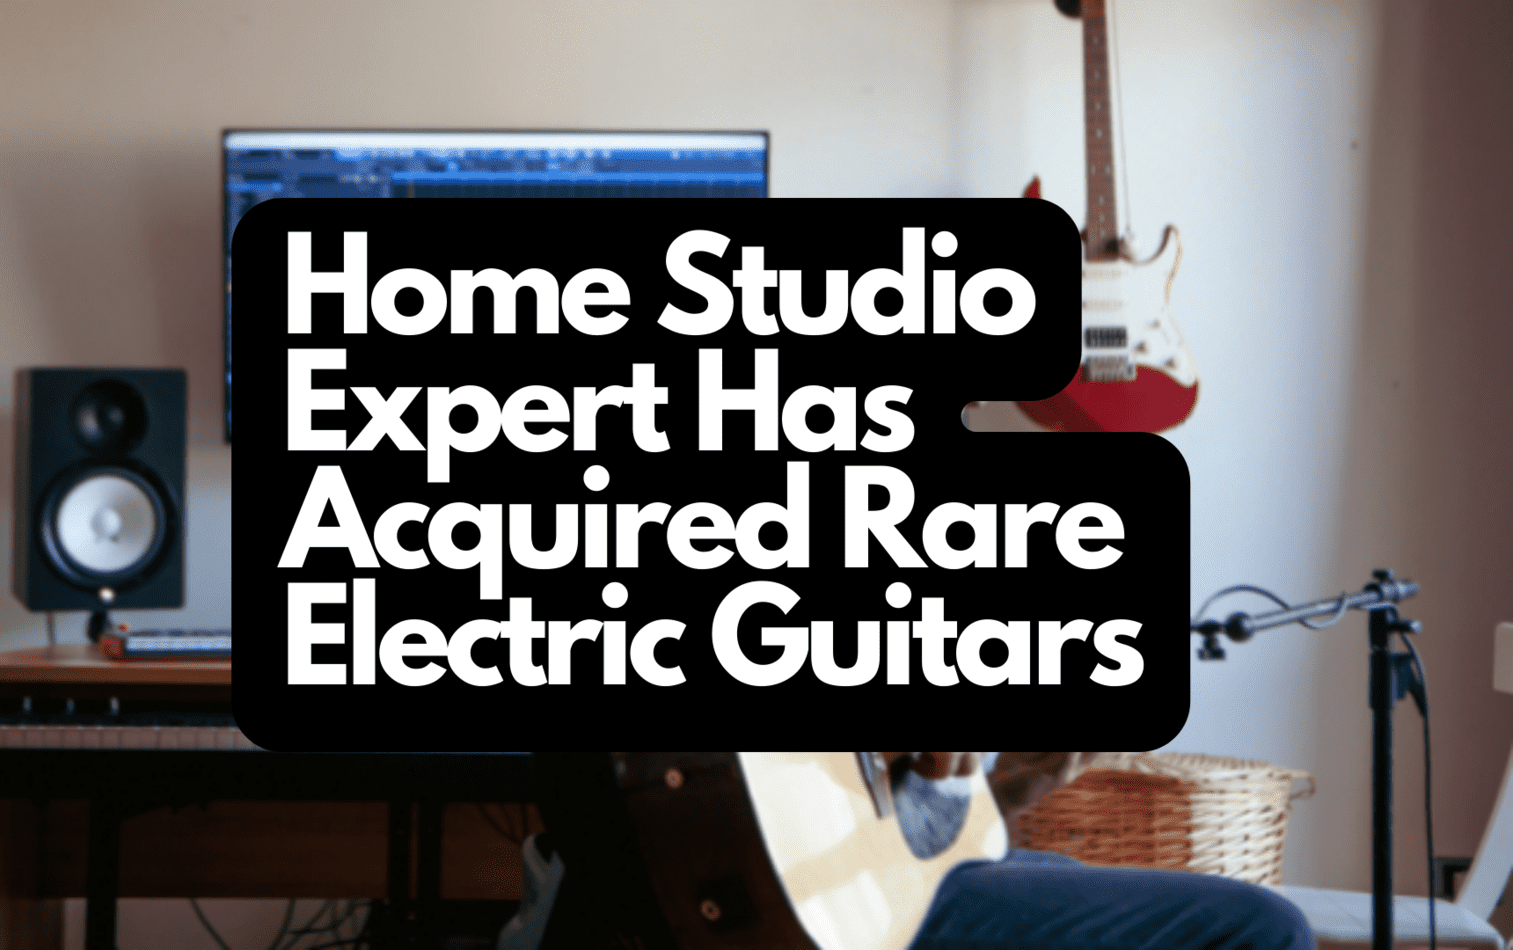 Home Studio Expert Has Acquired Rare Electric Guitars